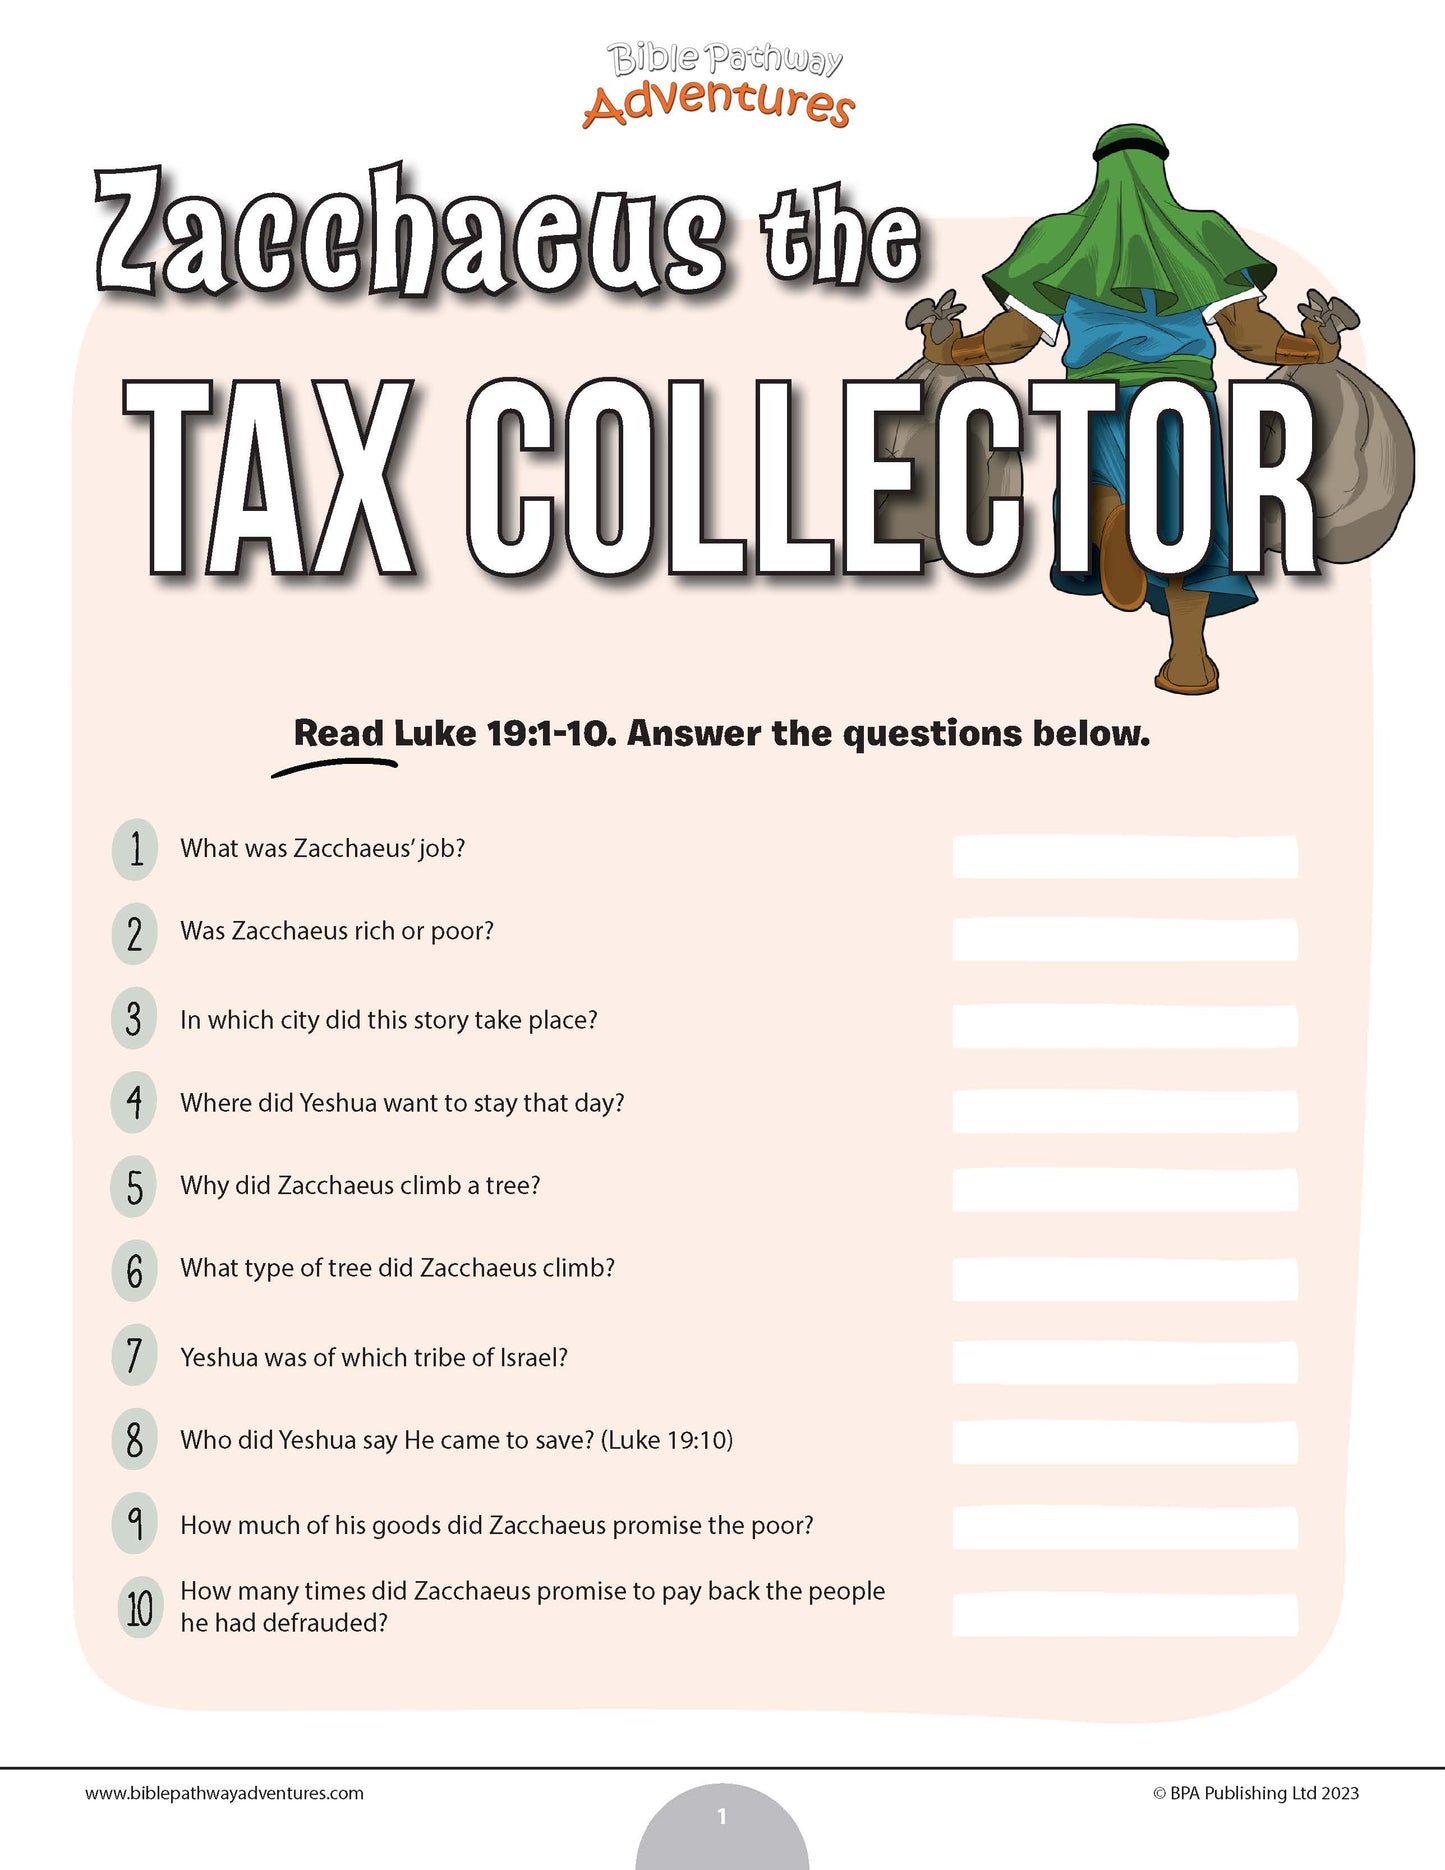 Zacchaeus the Tax Collector quiz